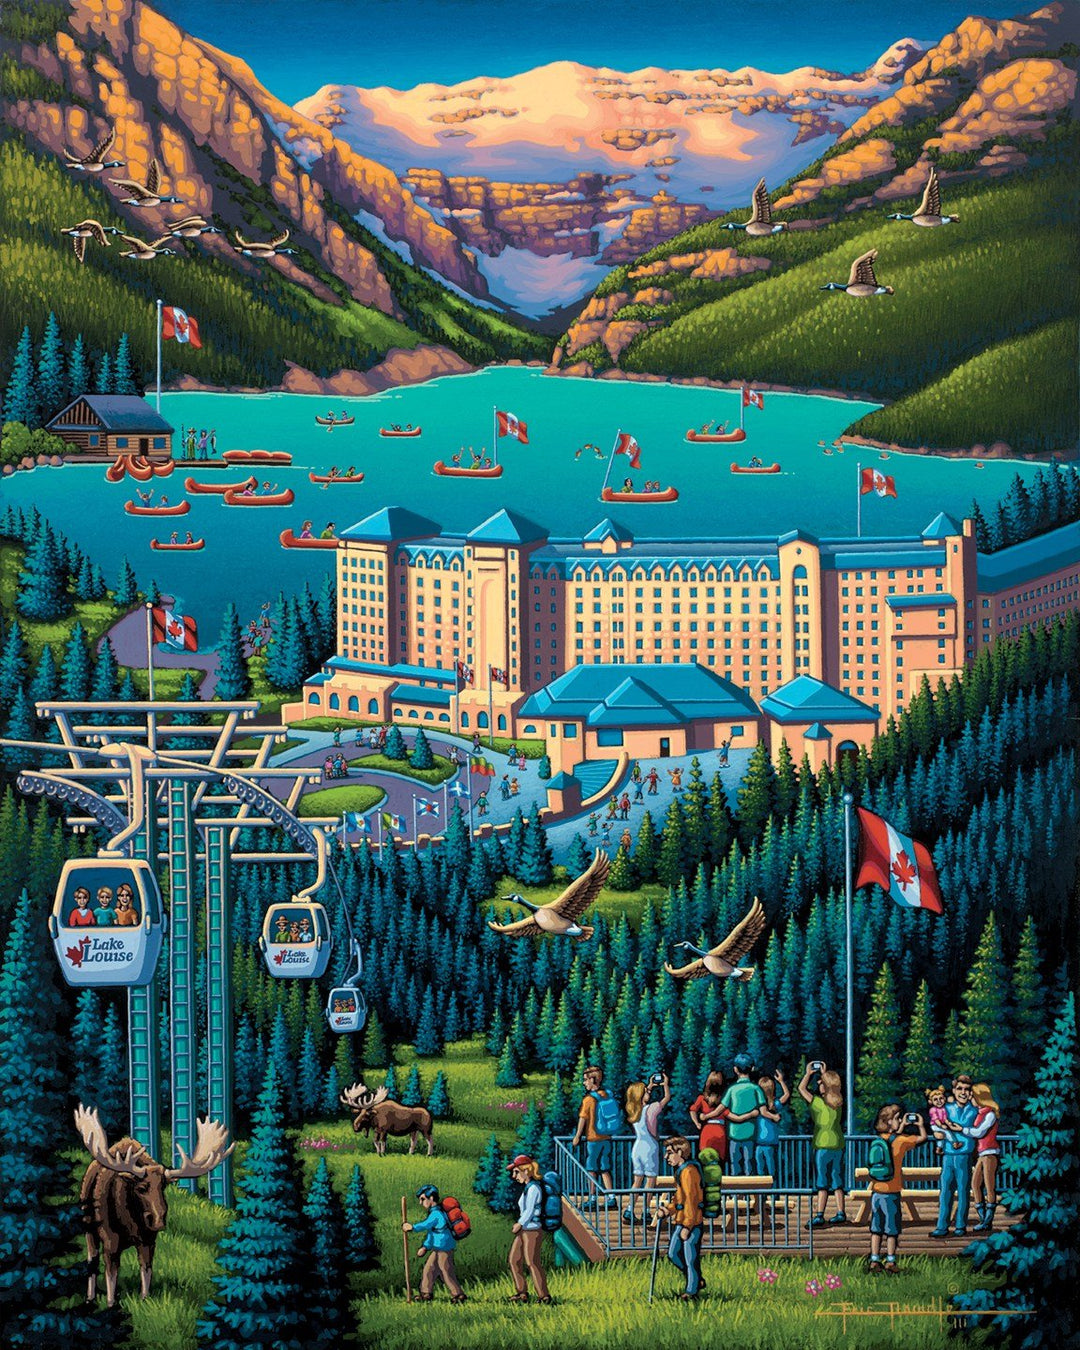 Lake Louise Poster Print